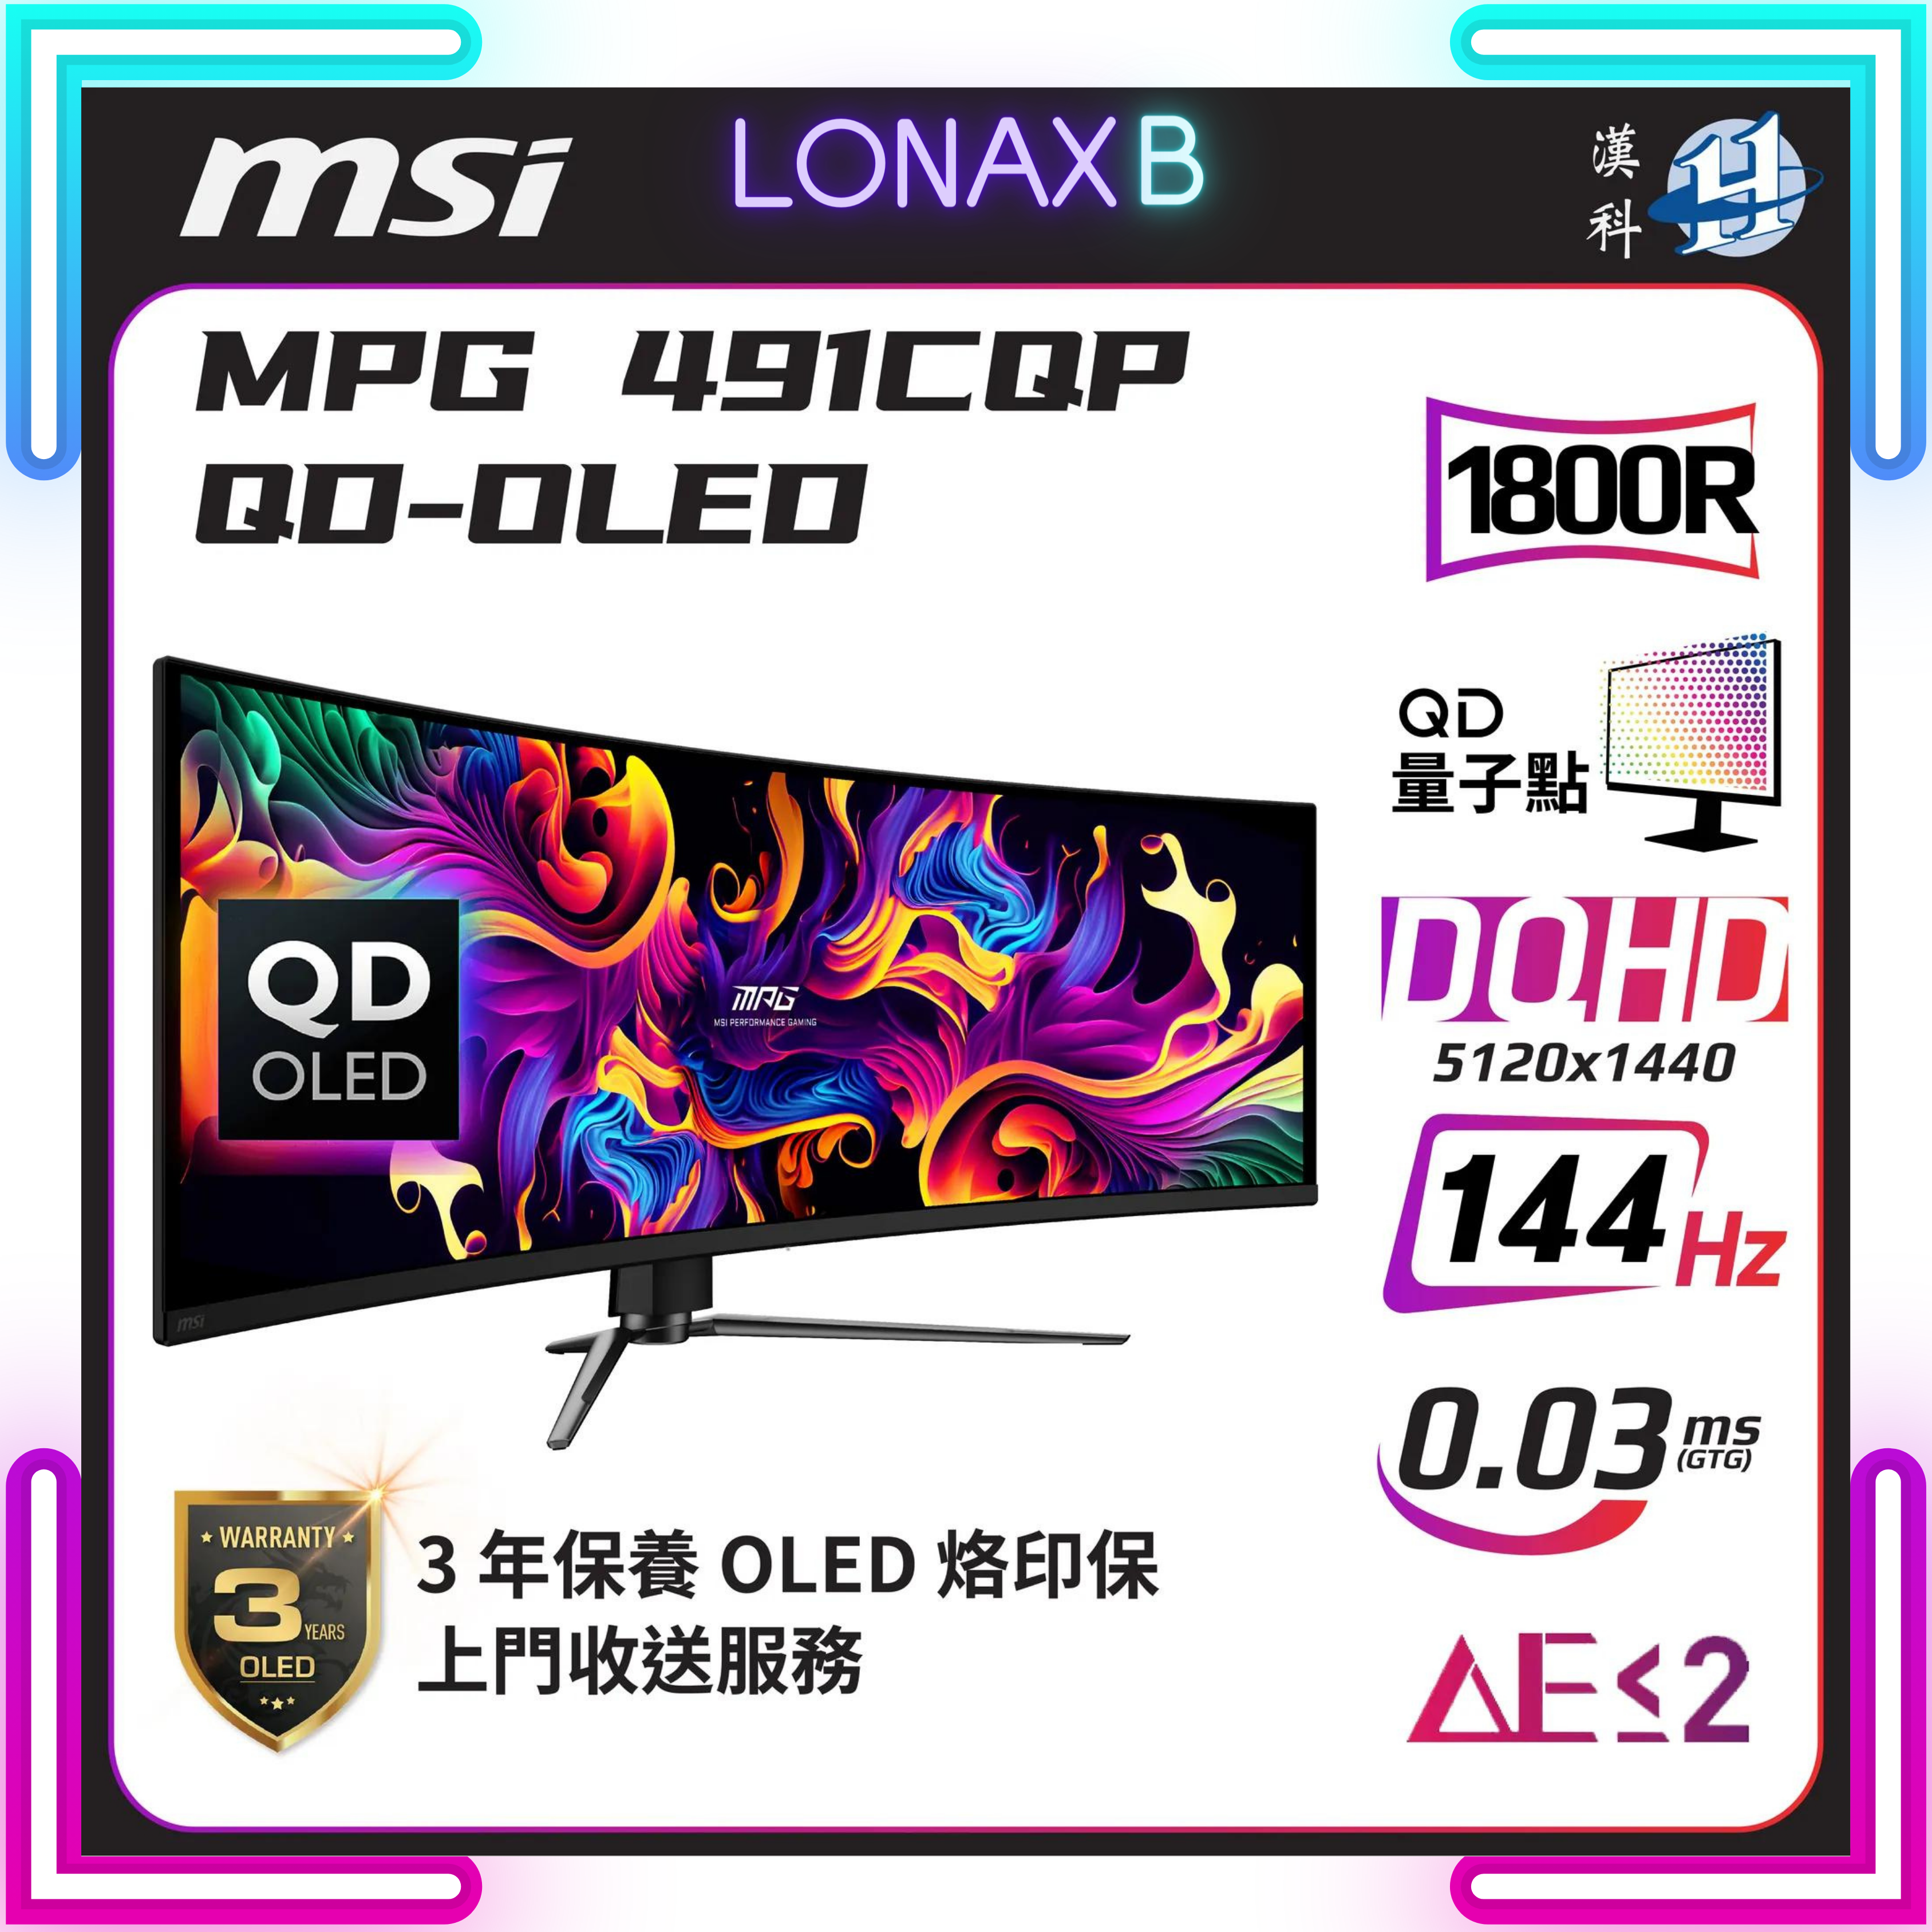 【QD-OLED 量子點OLED】MSI 微星 MPG 491CQP QD-OLED 曲面電競顯示器 (49吋 / DQHD / 144Hz / 0.03ms QD-OLED / 10bits / DisplayHDR True Black 400 / Type-C 90W / HDMI 2.1) - 5120 x 1440